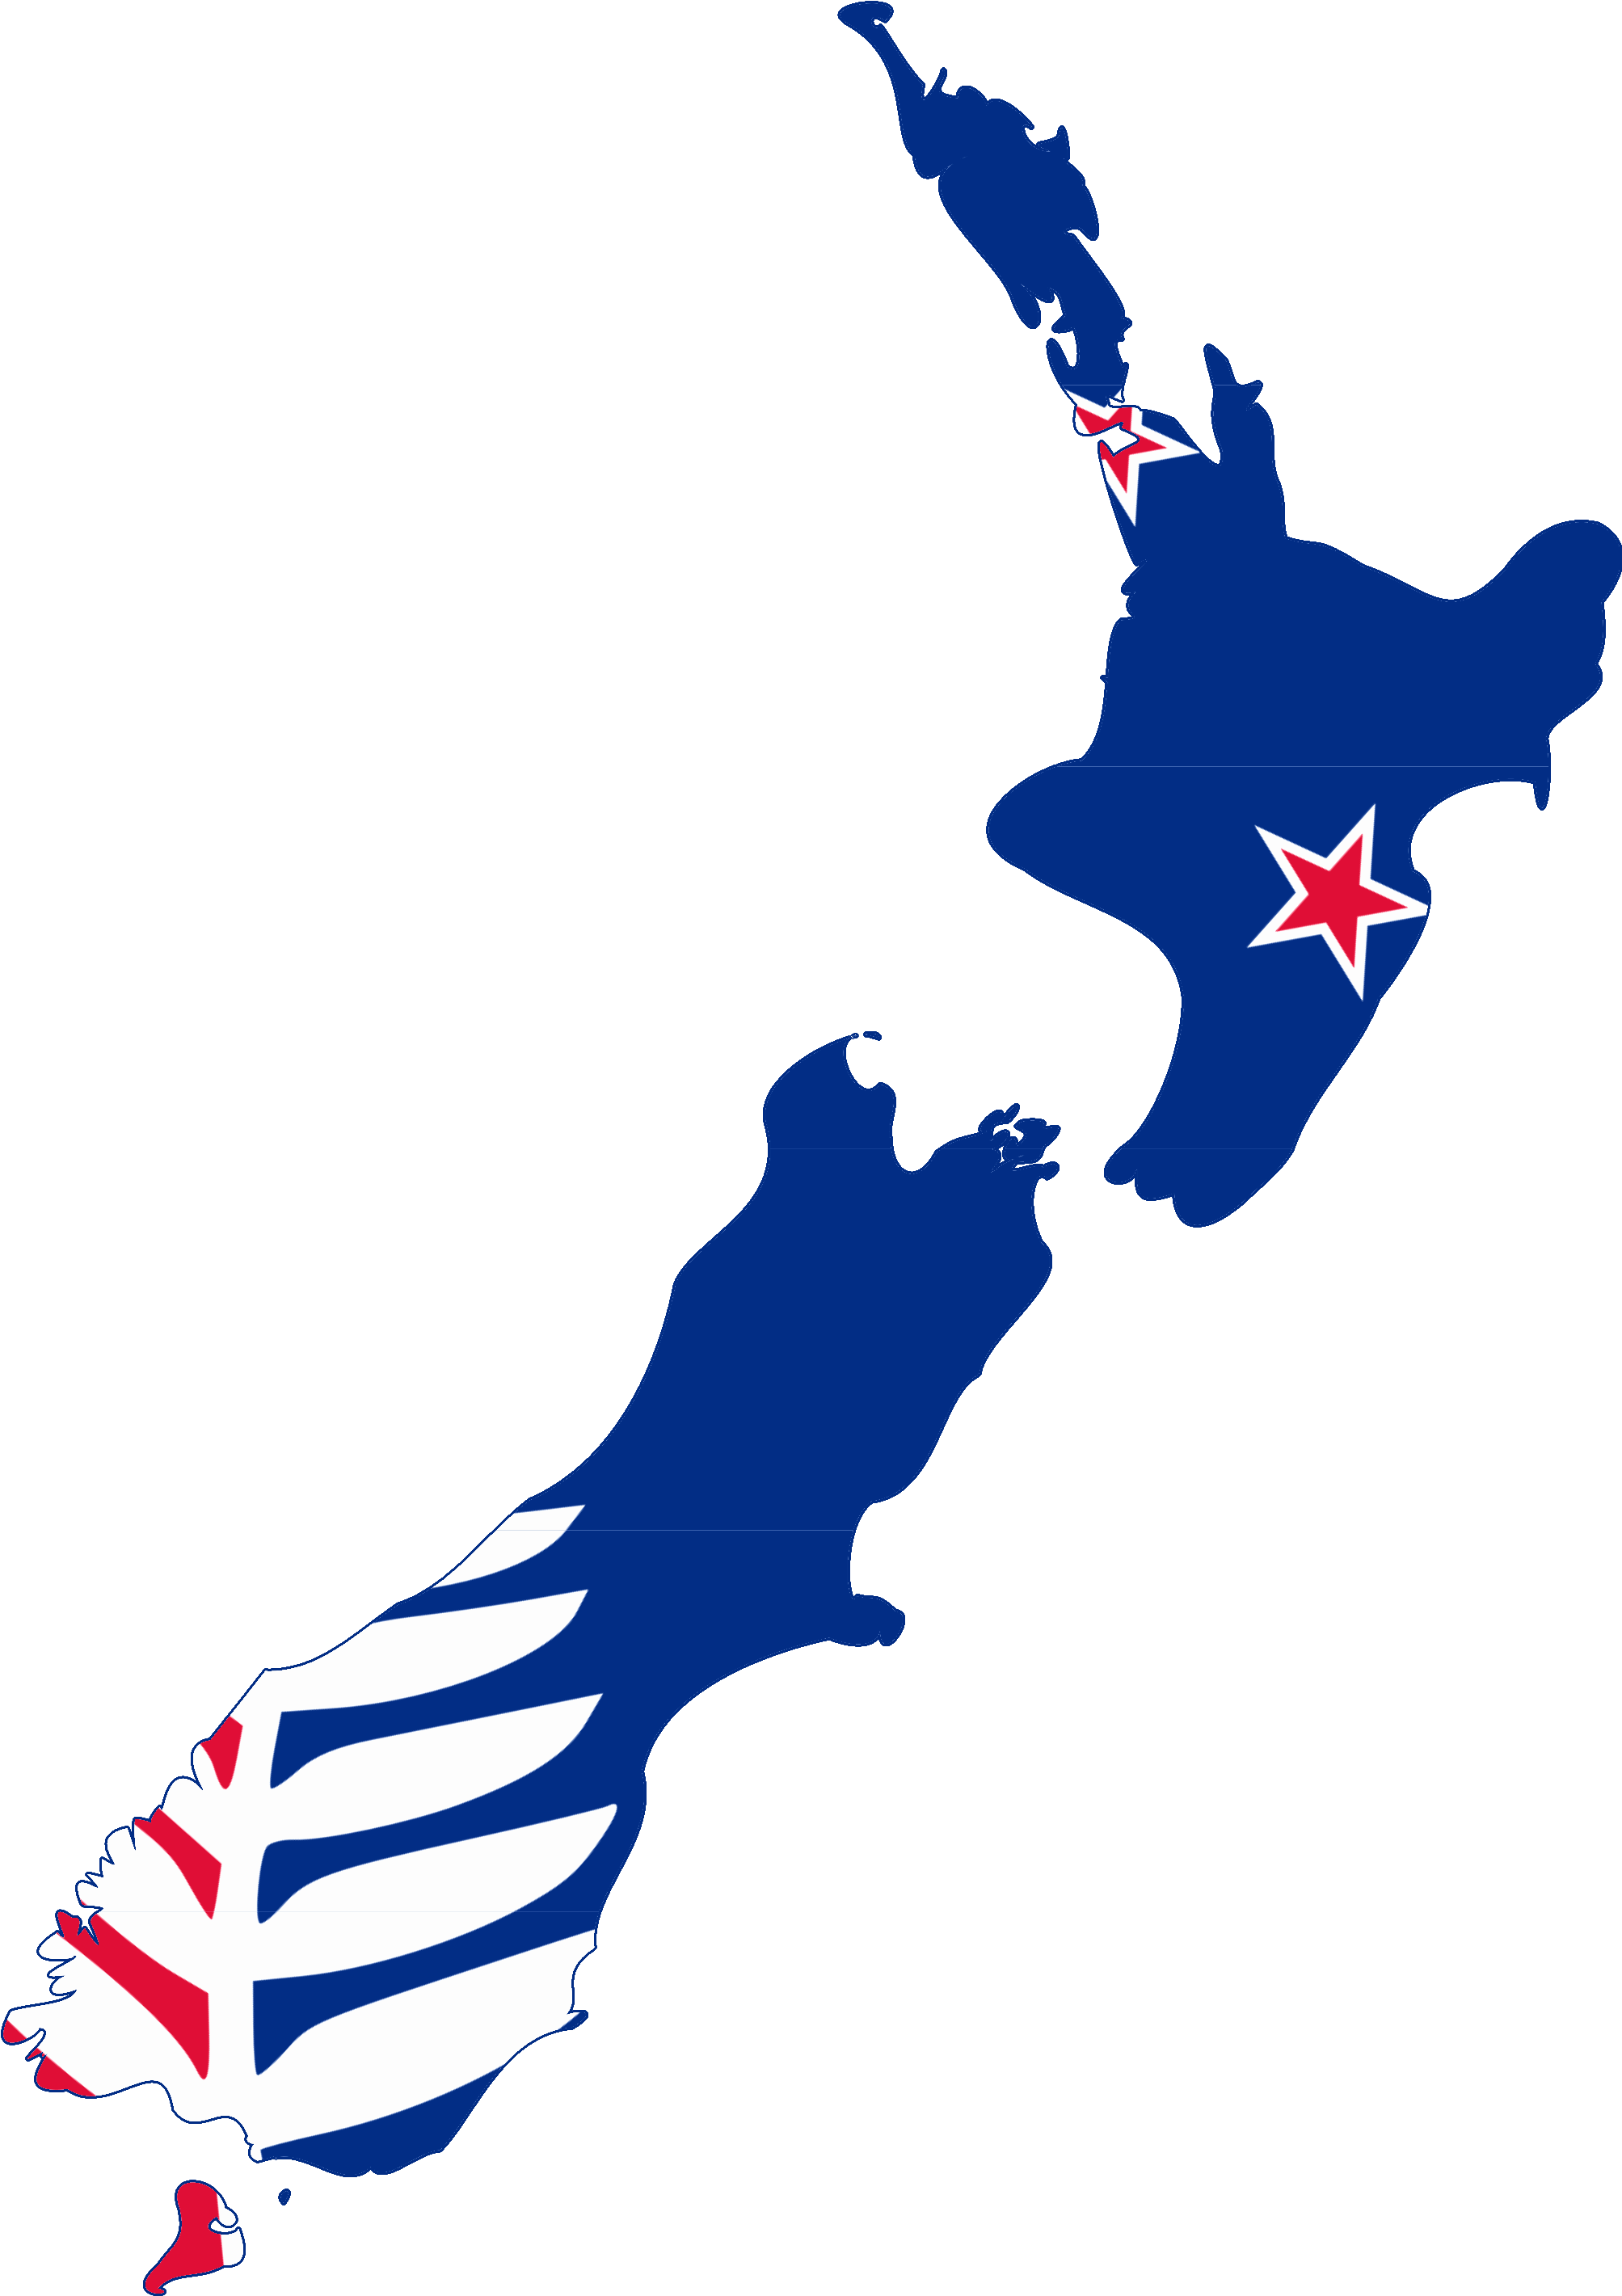 New Zealand Flag Transparent Image